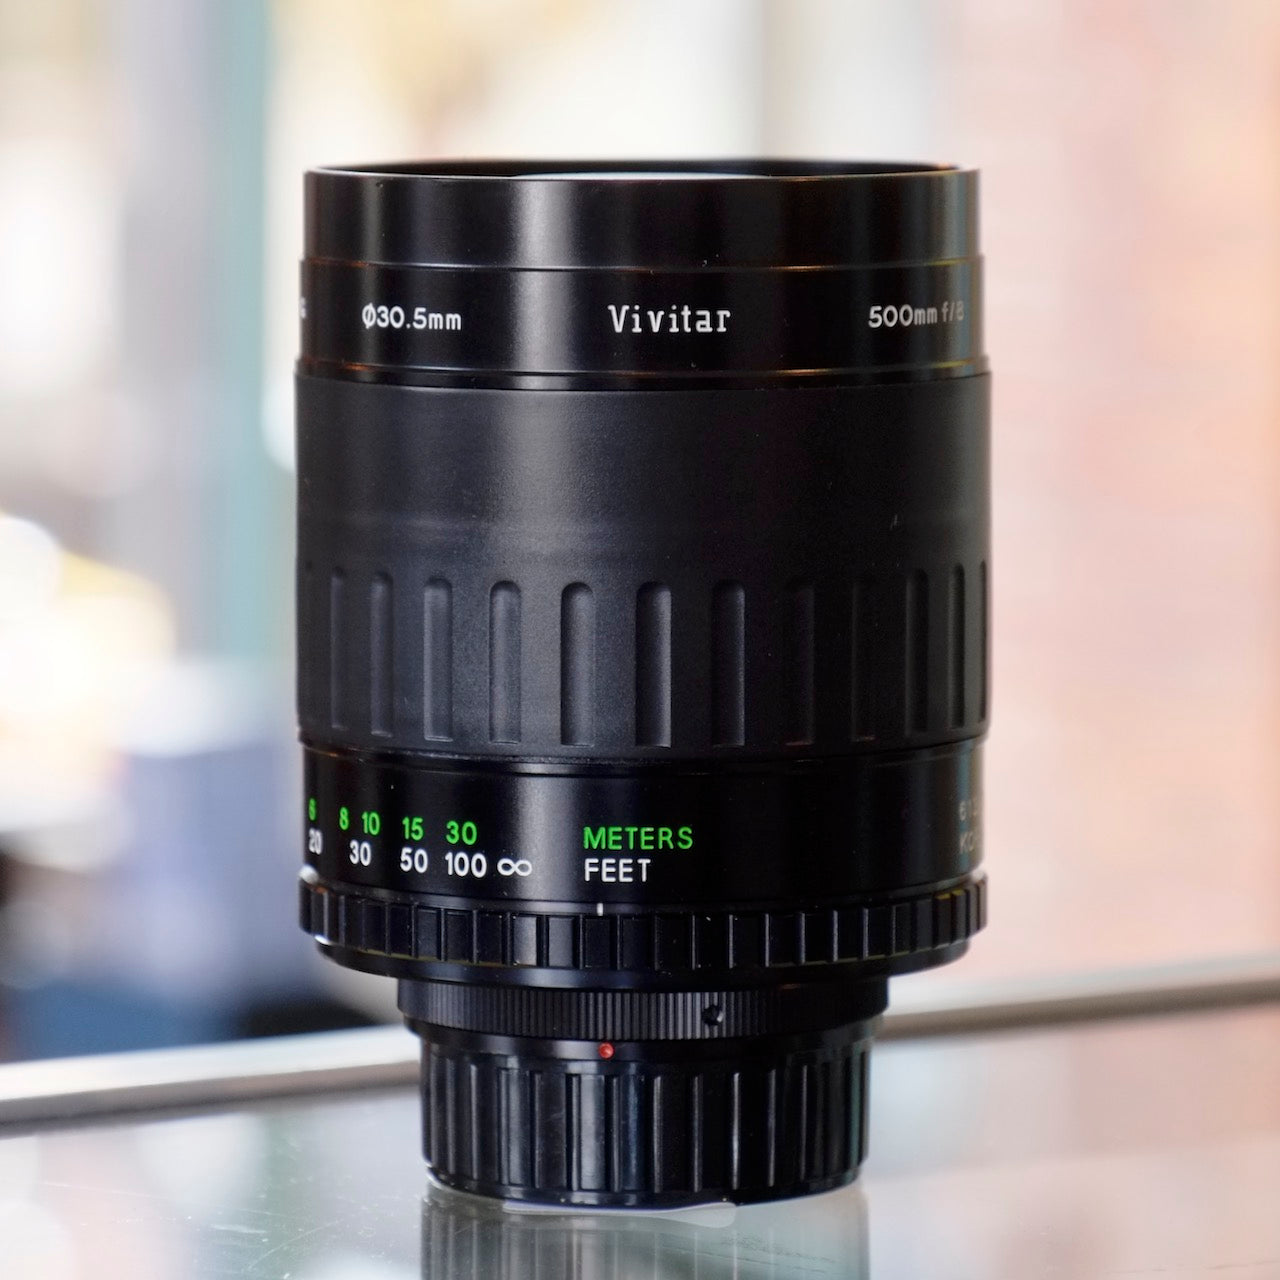 Vivitar 500mm f8 mirror lens for Nikon F mount